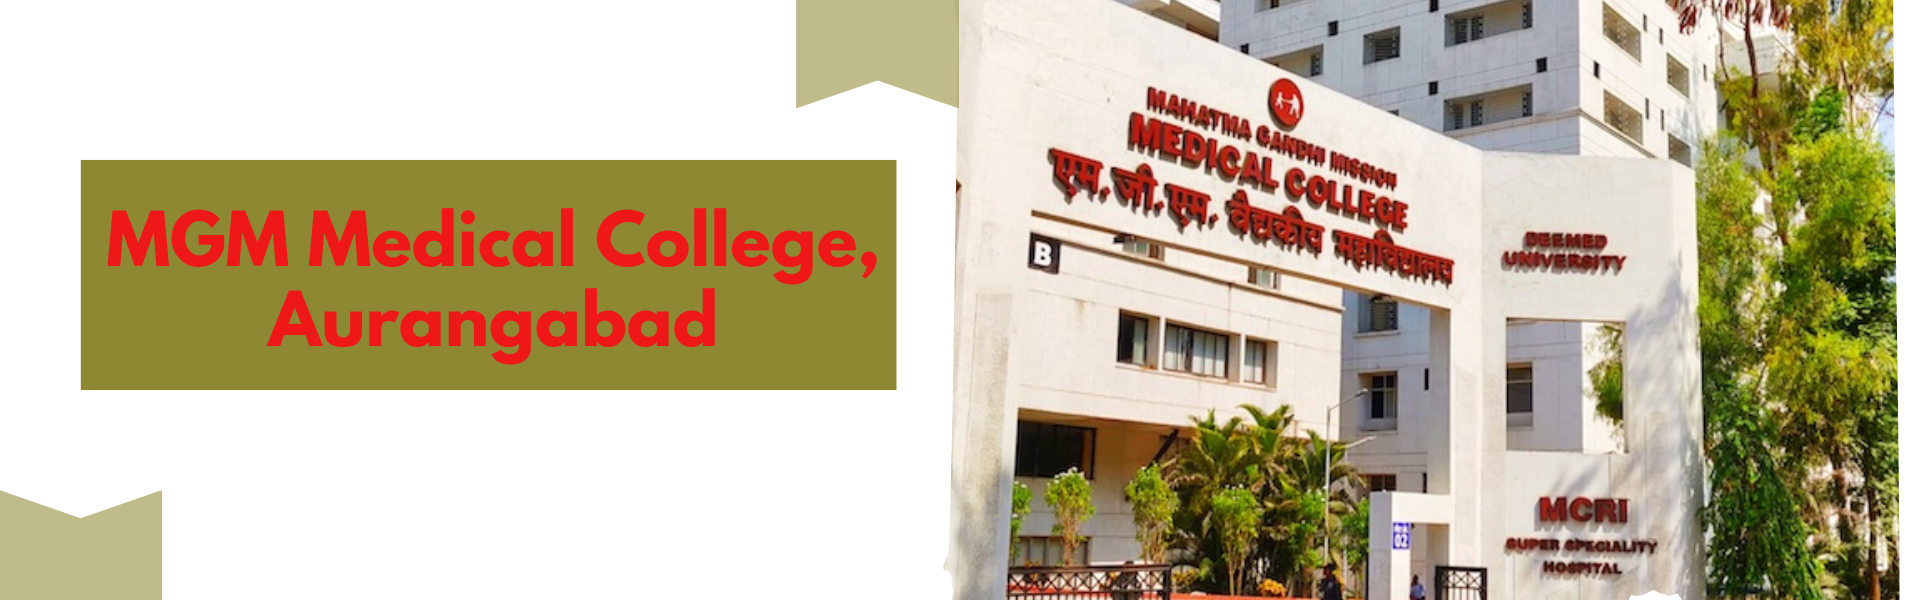 MGM Medical College, Aurangabad